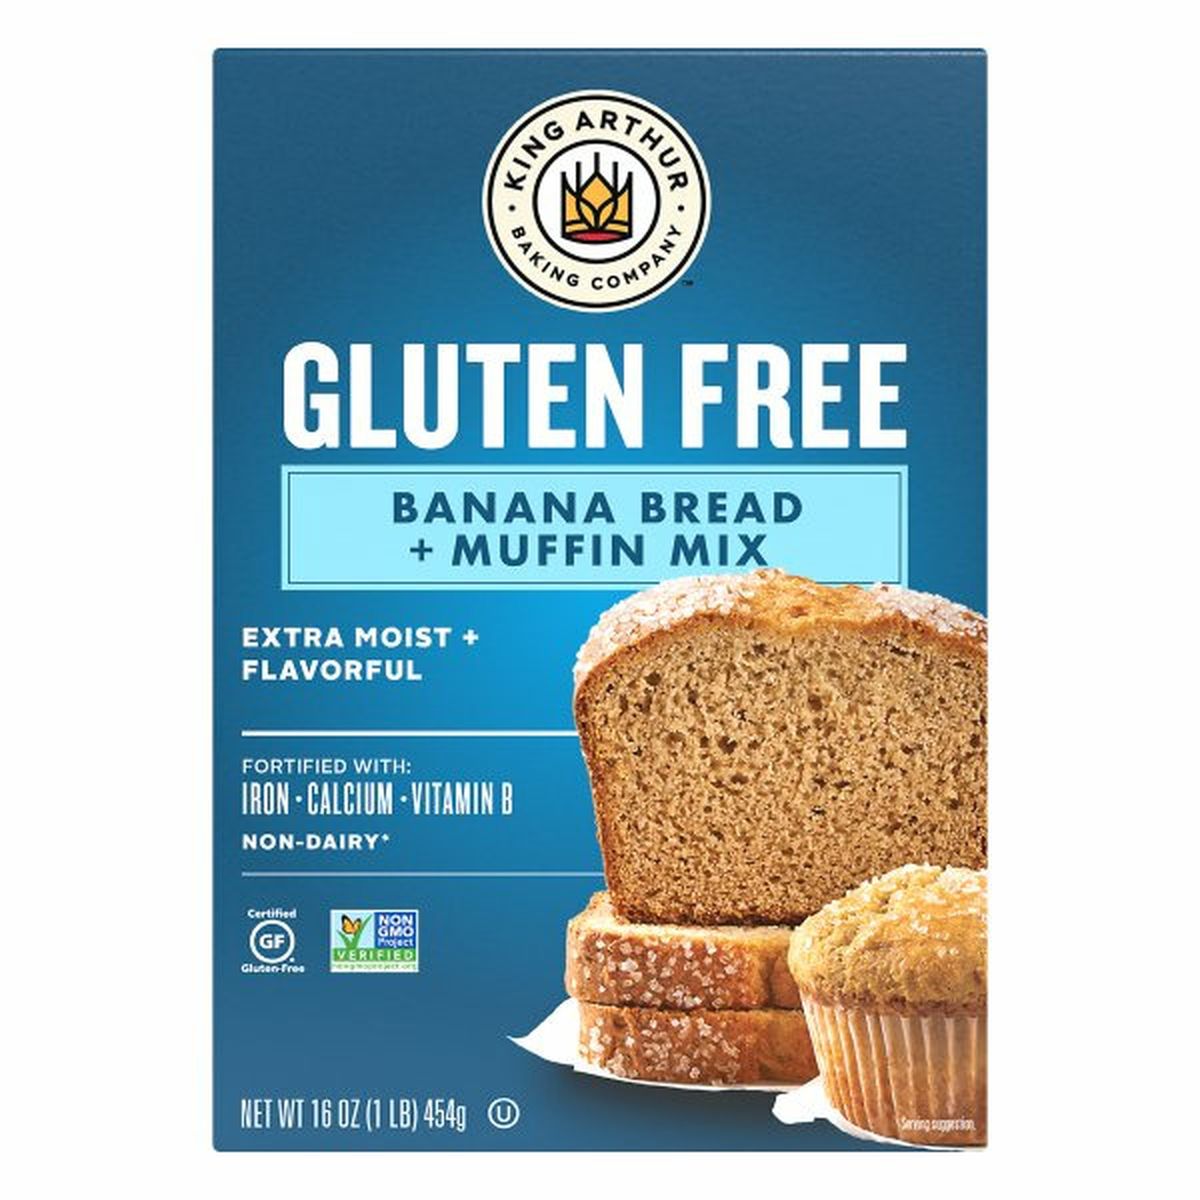 Calories in King Arthur Baking Company Banana Bread + Muffin Mix, Gluten Free